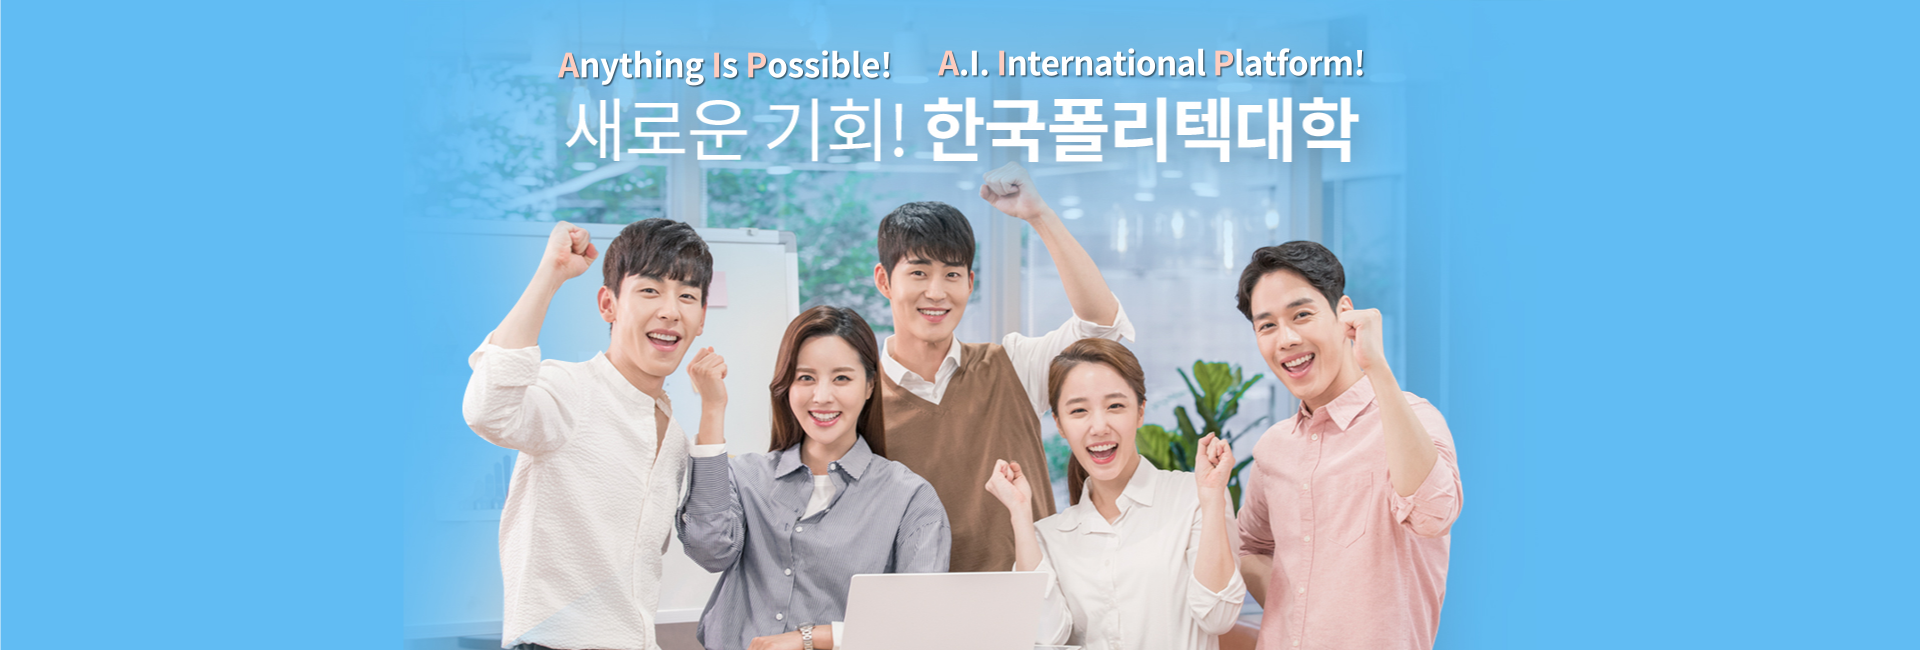 Anythig Is possible! A.I. International Platform! 새로운 기회! 한국폴리텍대학